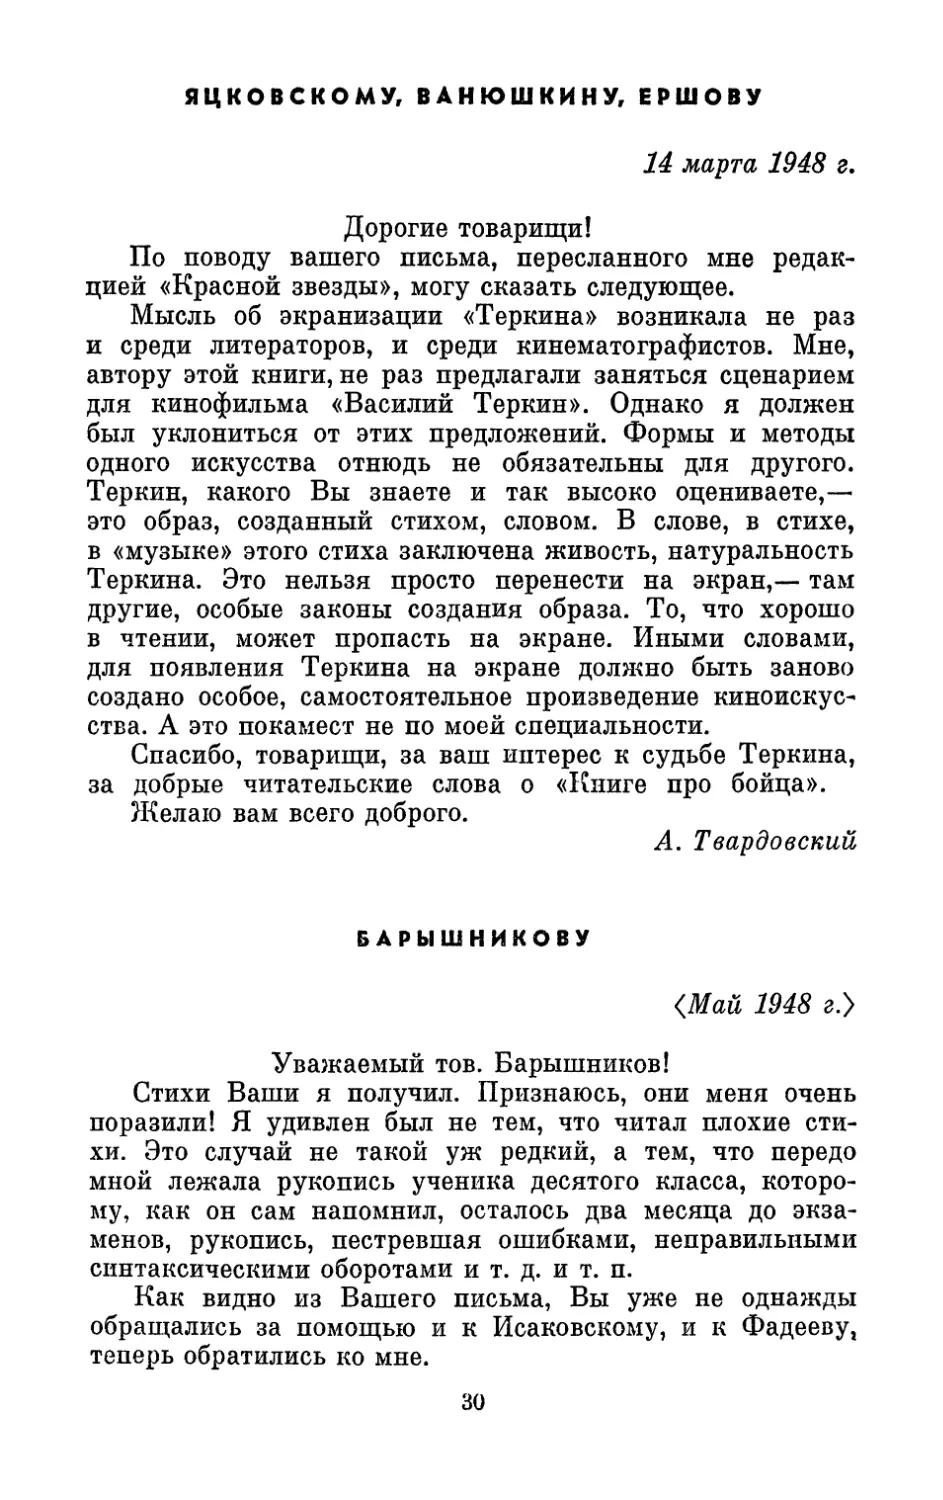 Яцковскому, Ванюшкину, Ершову, 14 марта 1948 г.
Барышникову, <май 1948 г.>